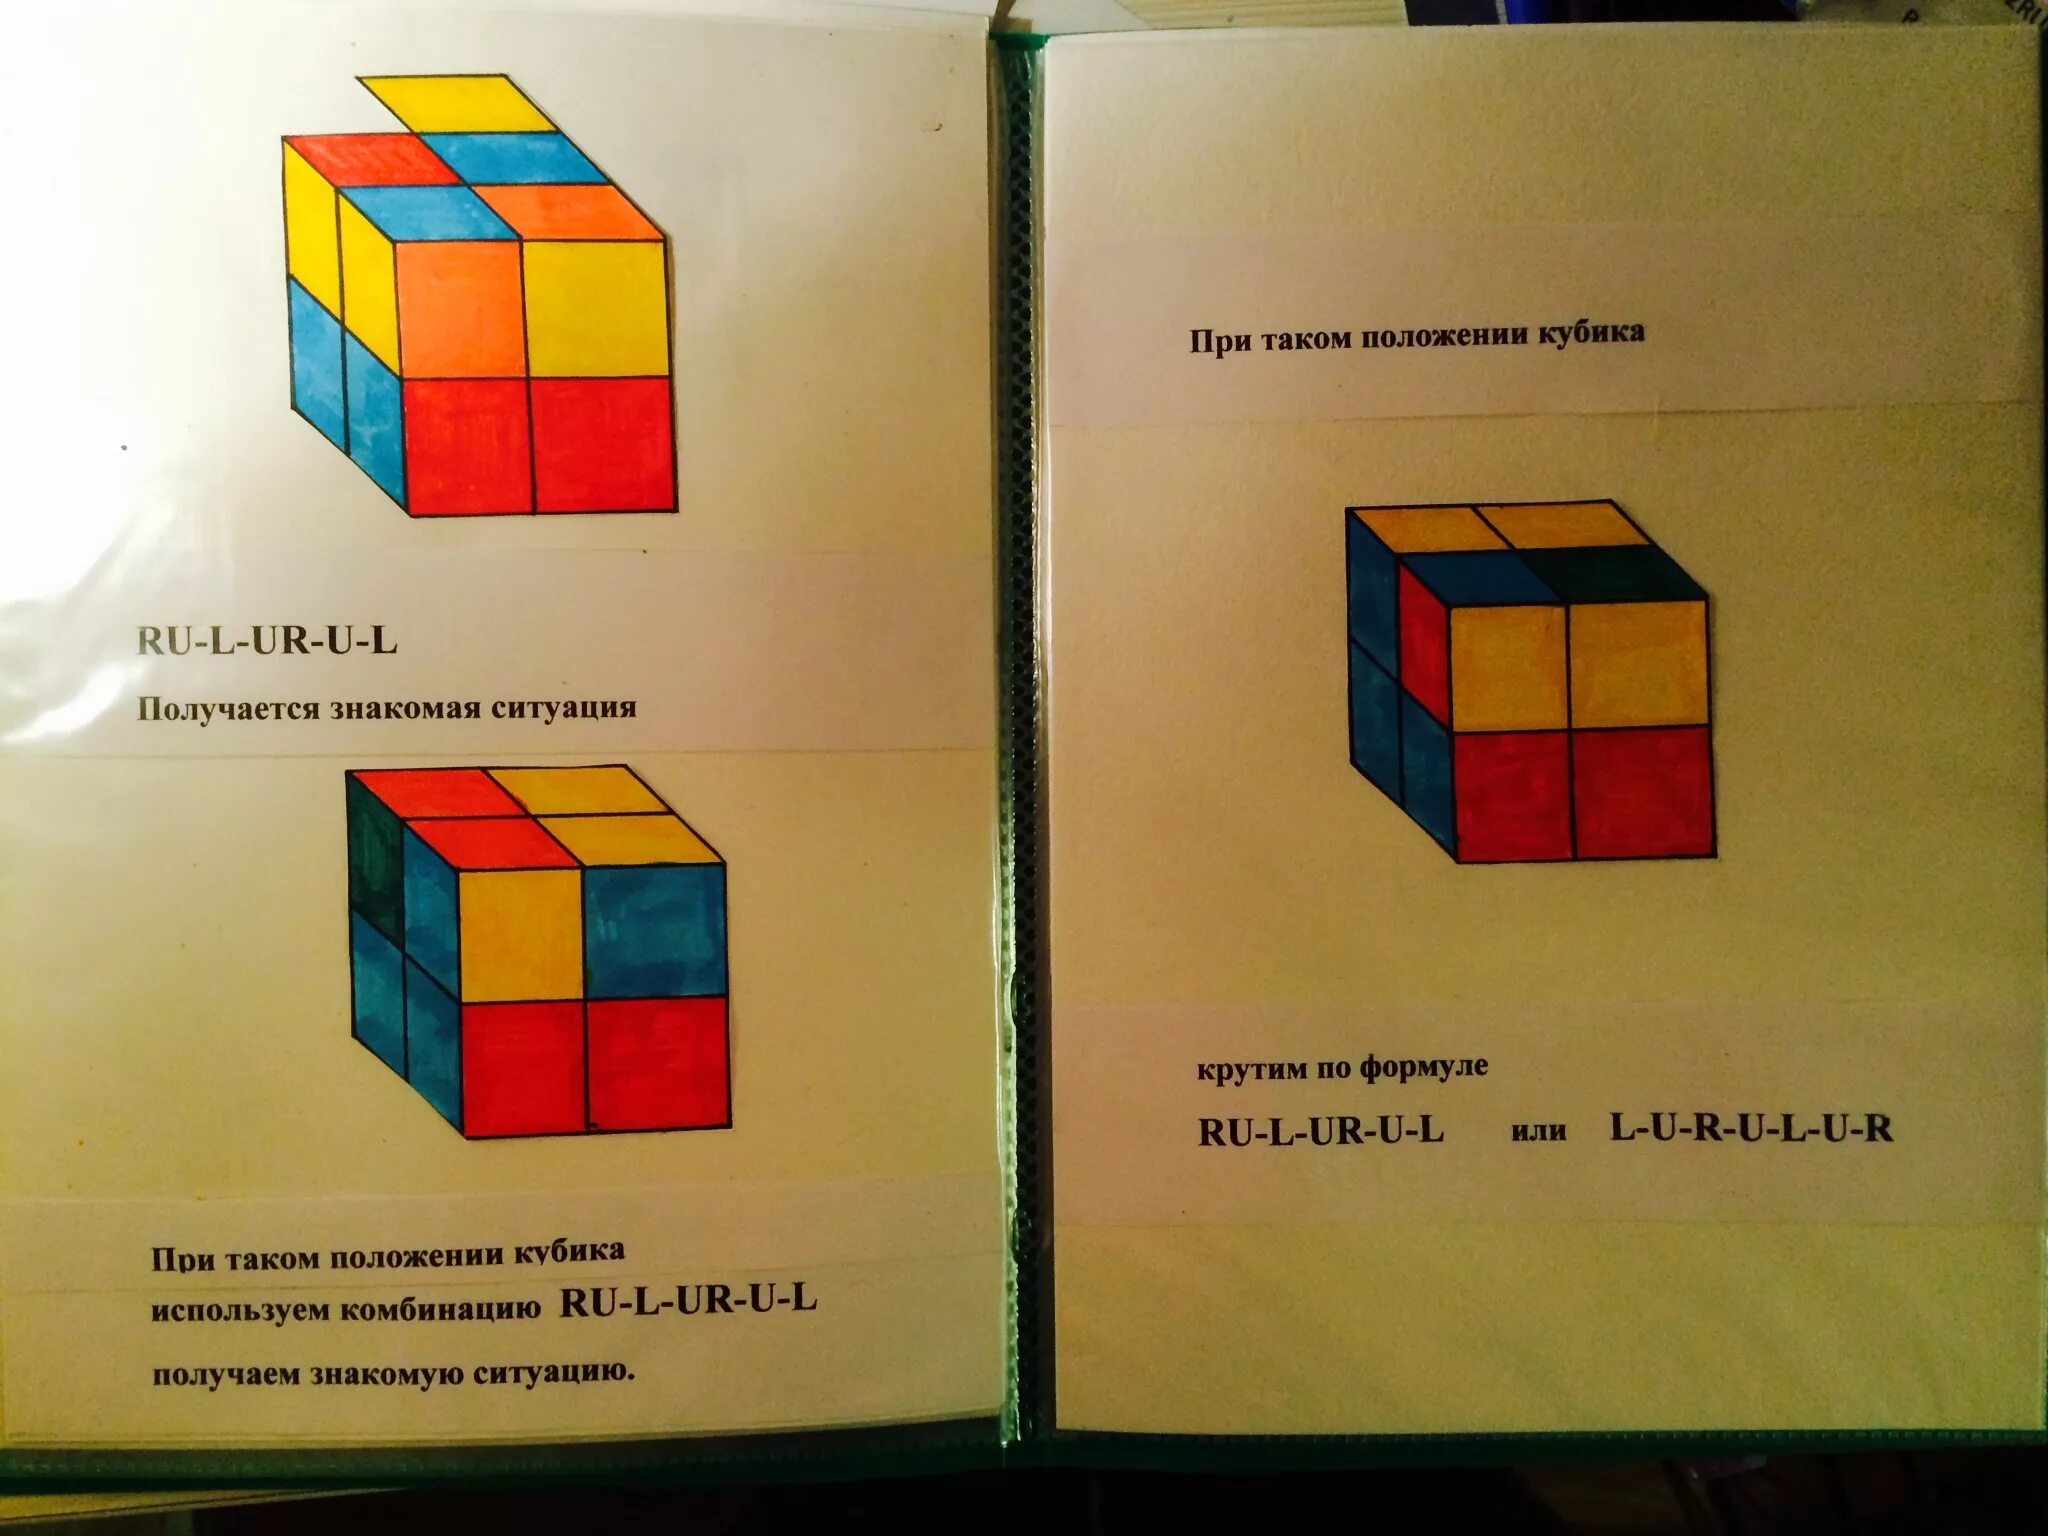 Как собрать кубик рубик 2x2. Формула сбора кубика Рубика 2х2. Кубик рубик 2х2 формулы сборки кубика. Алгоритм сборки кубика Рубика 2 на 2. Формула сборки кубика Рубика 2 на 2.